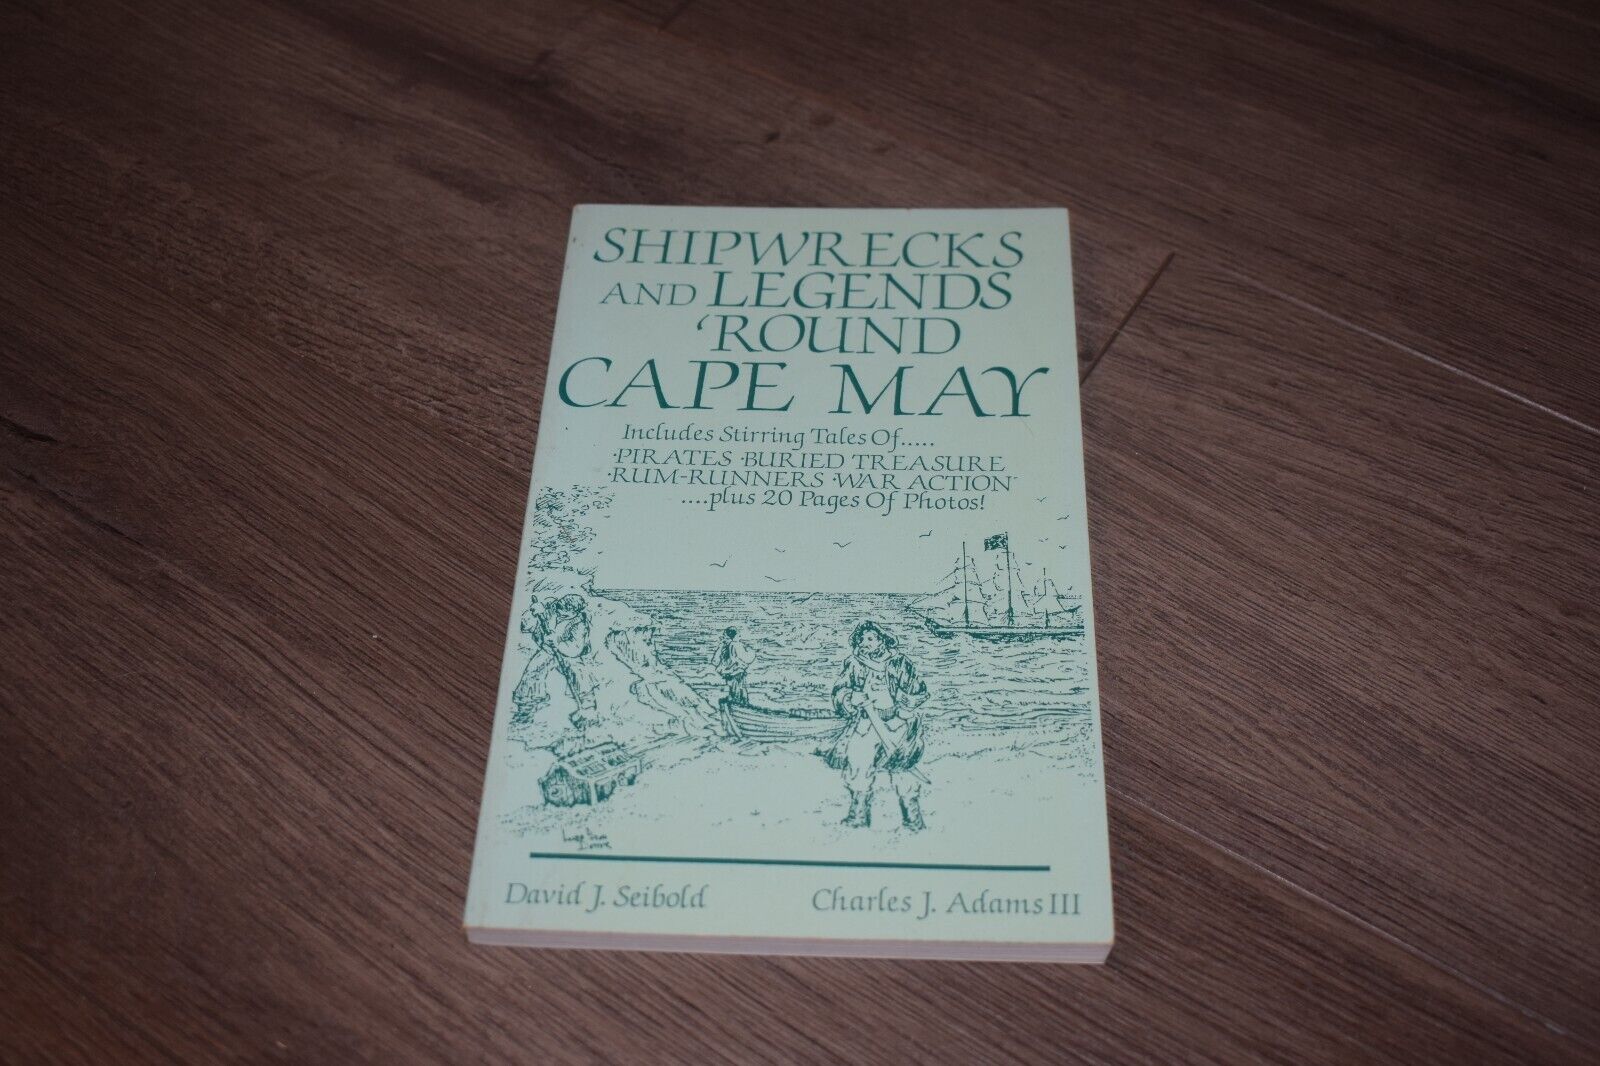 Shipwrecks & Legends Round Cape May by David Seibold & Charles Adams III 1987